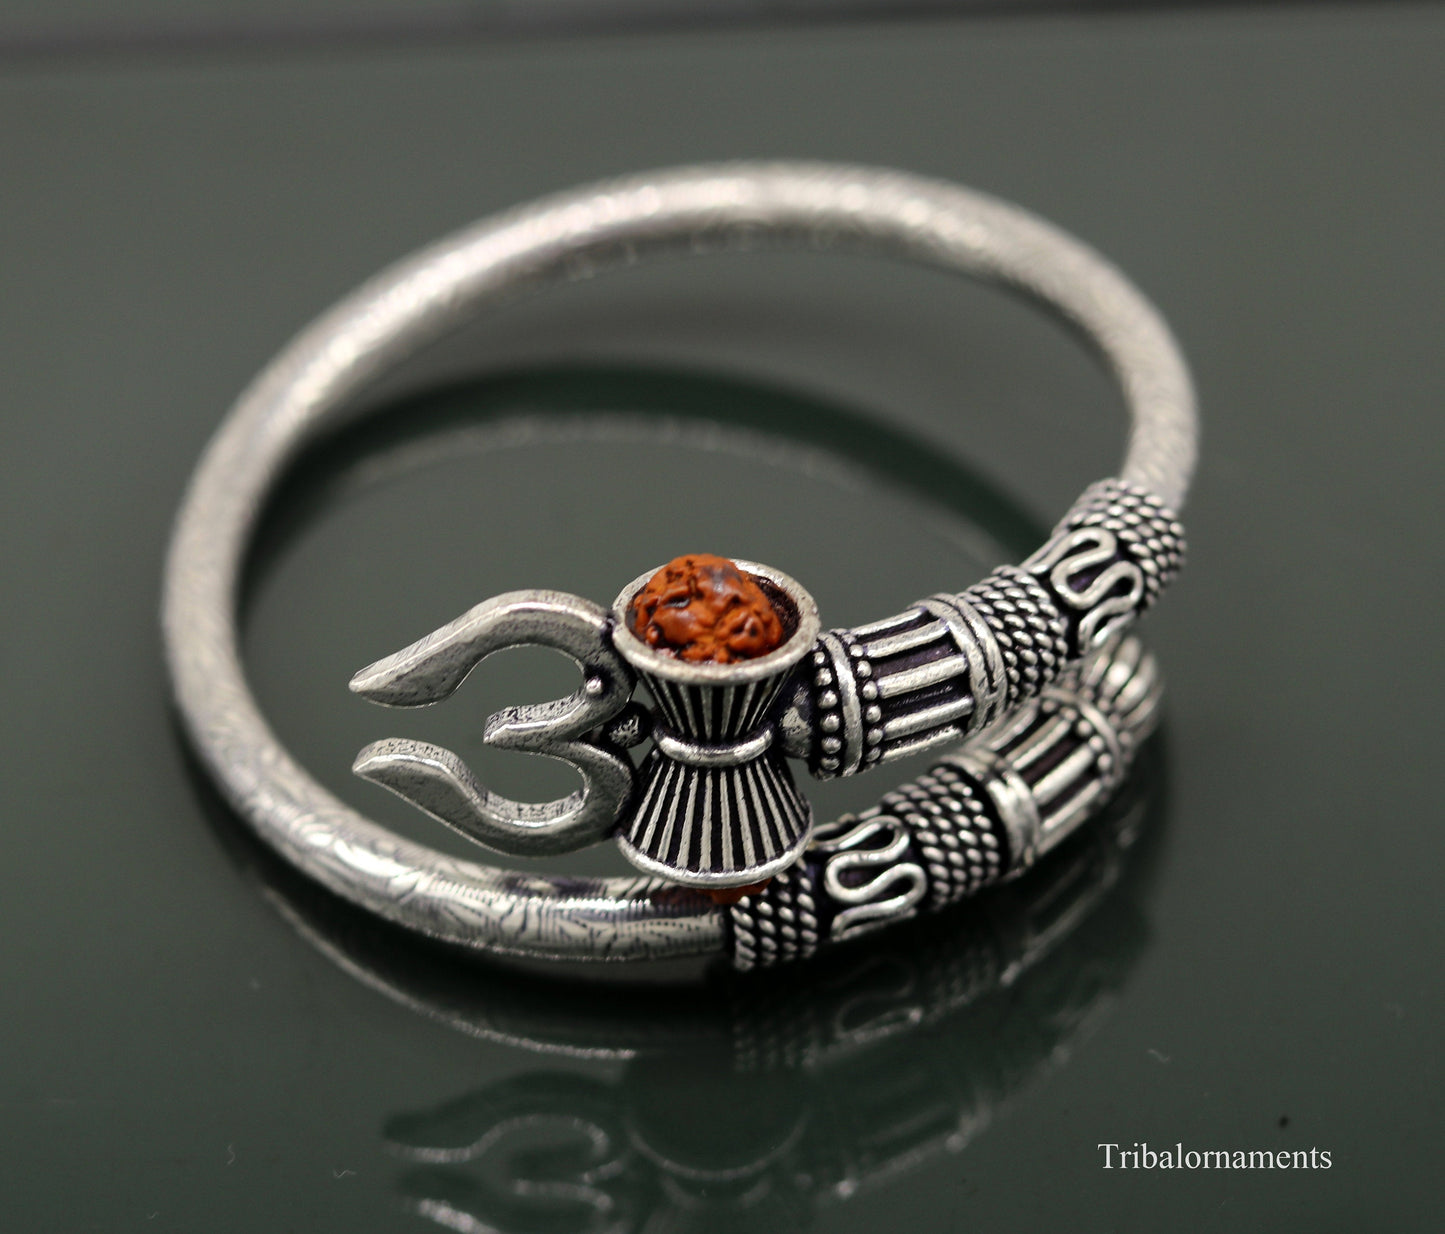 Lord Shiva trident design 925 sterling silver handmade bangle bracelet ,fabulous custom made oxidized unisex vintage design jewelry nsk248 - TRIBAL ORNAMENTS